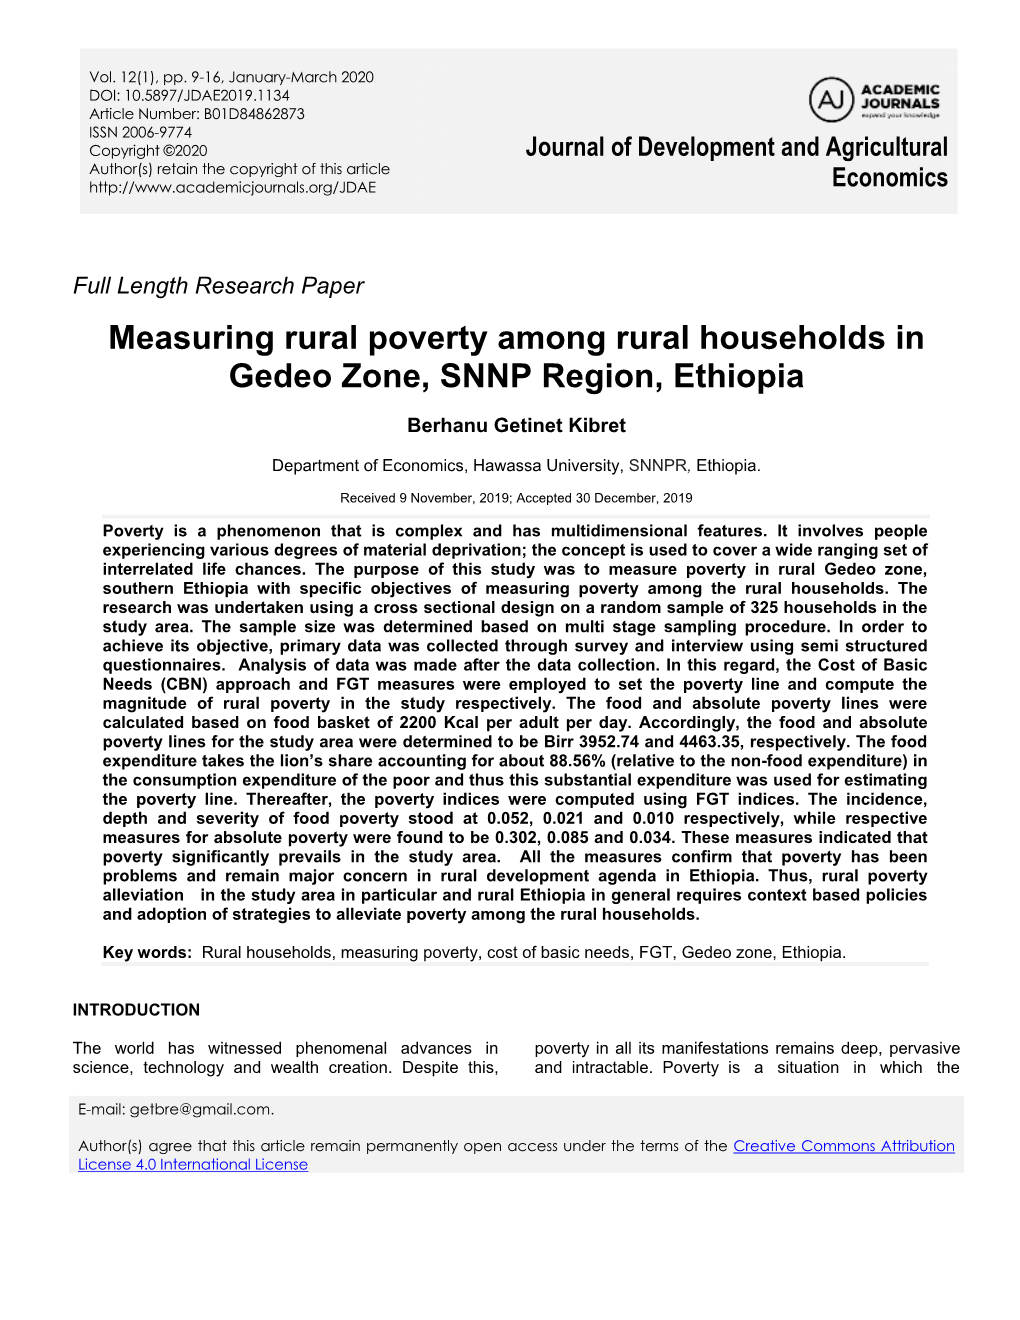 Measuring Rural Poverty Among Rural Households in Gedeo Zone, SNNP Region, Ethiopia